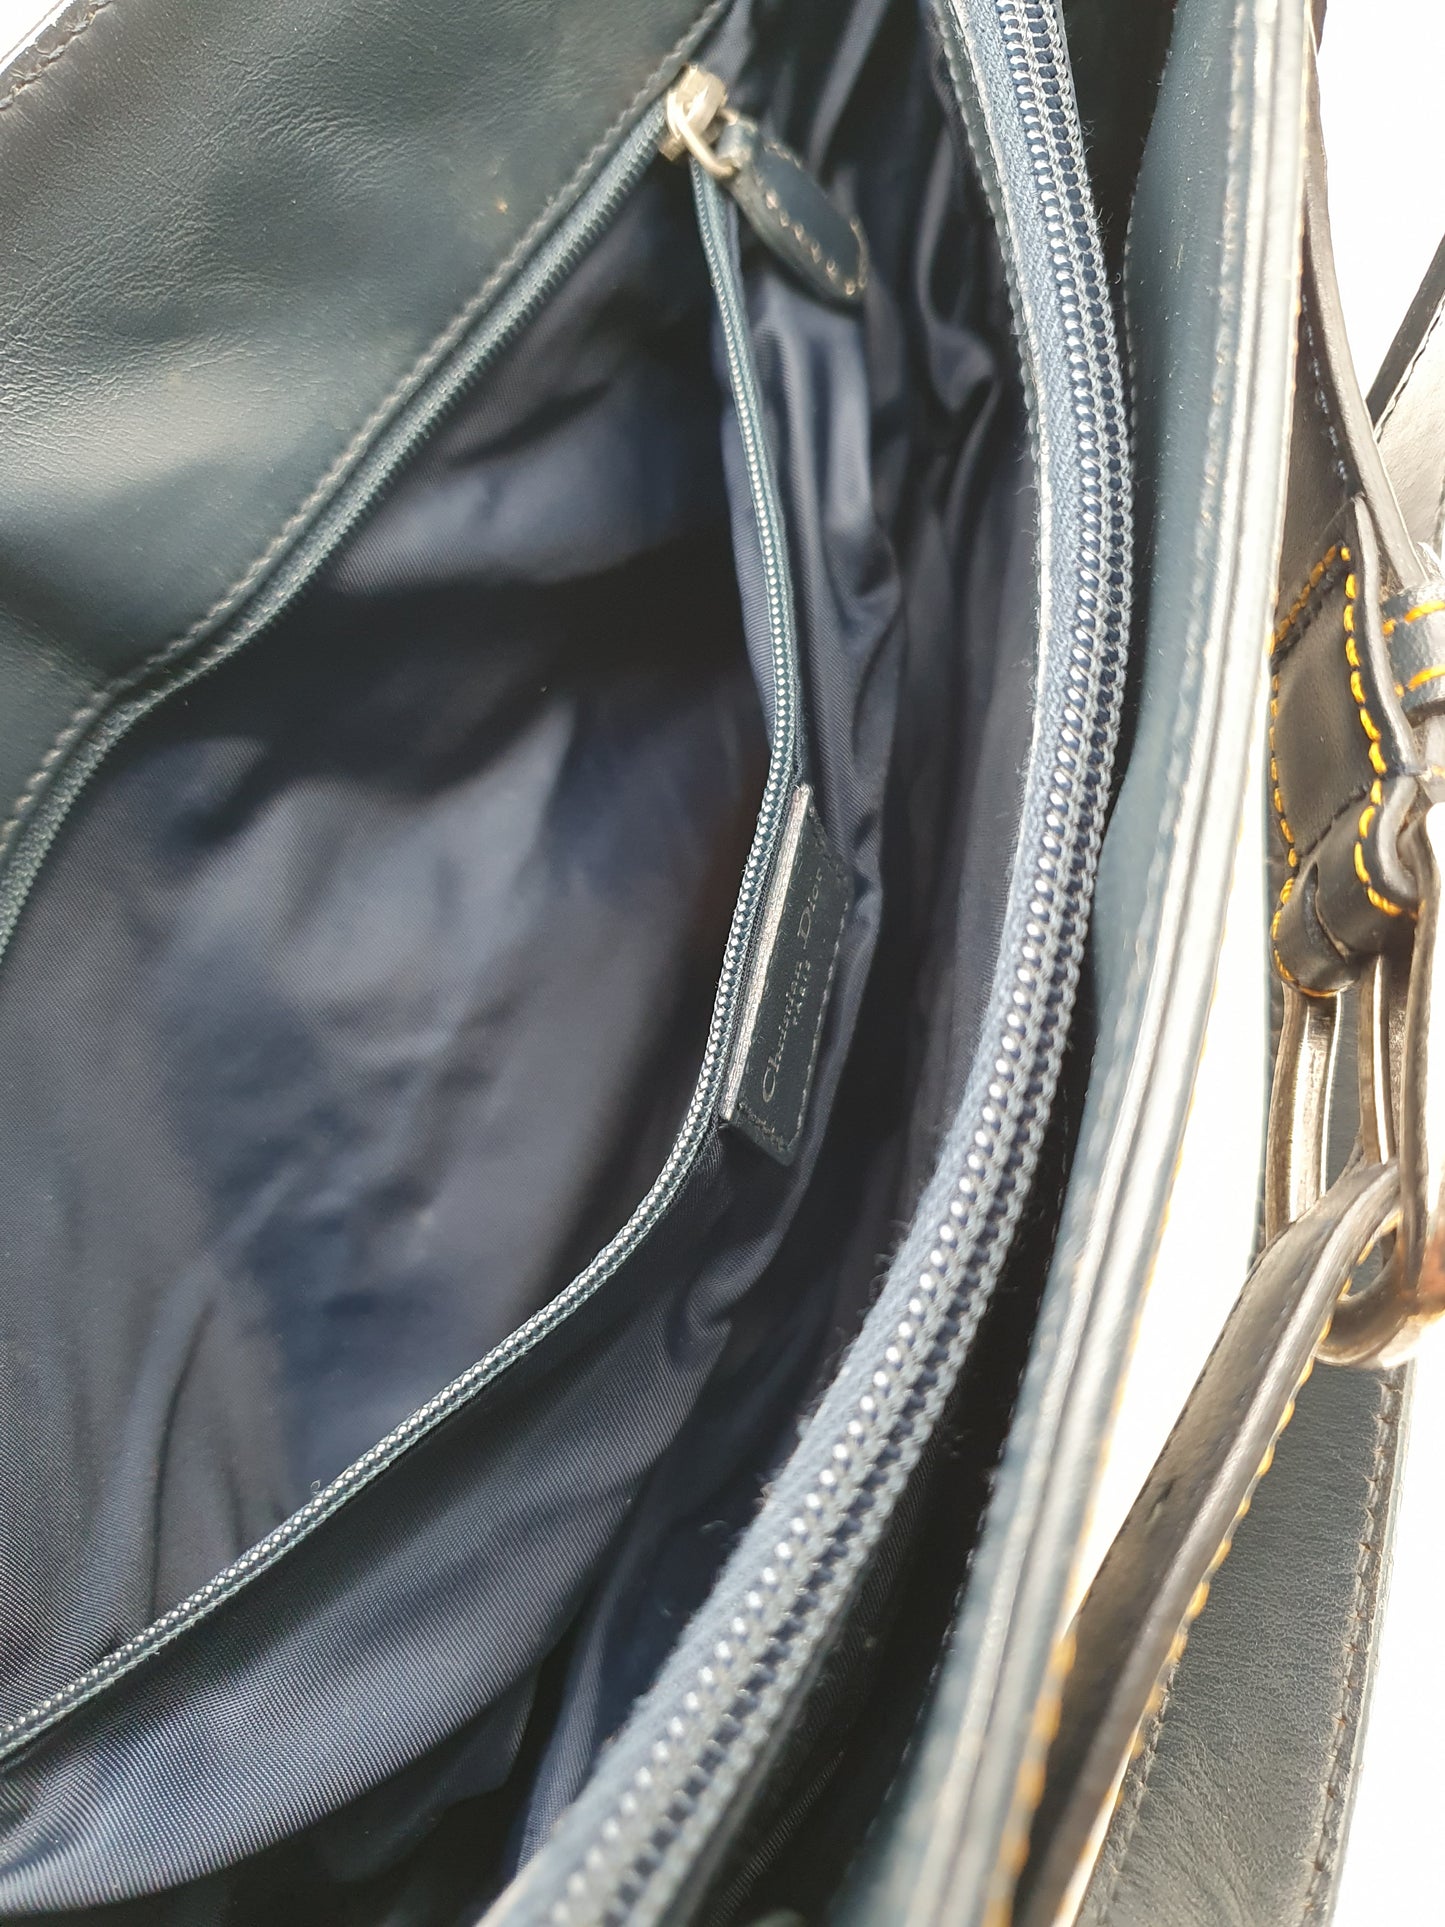 Dior saddle bowler handbag